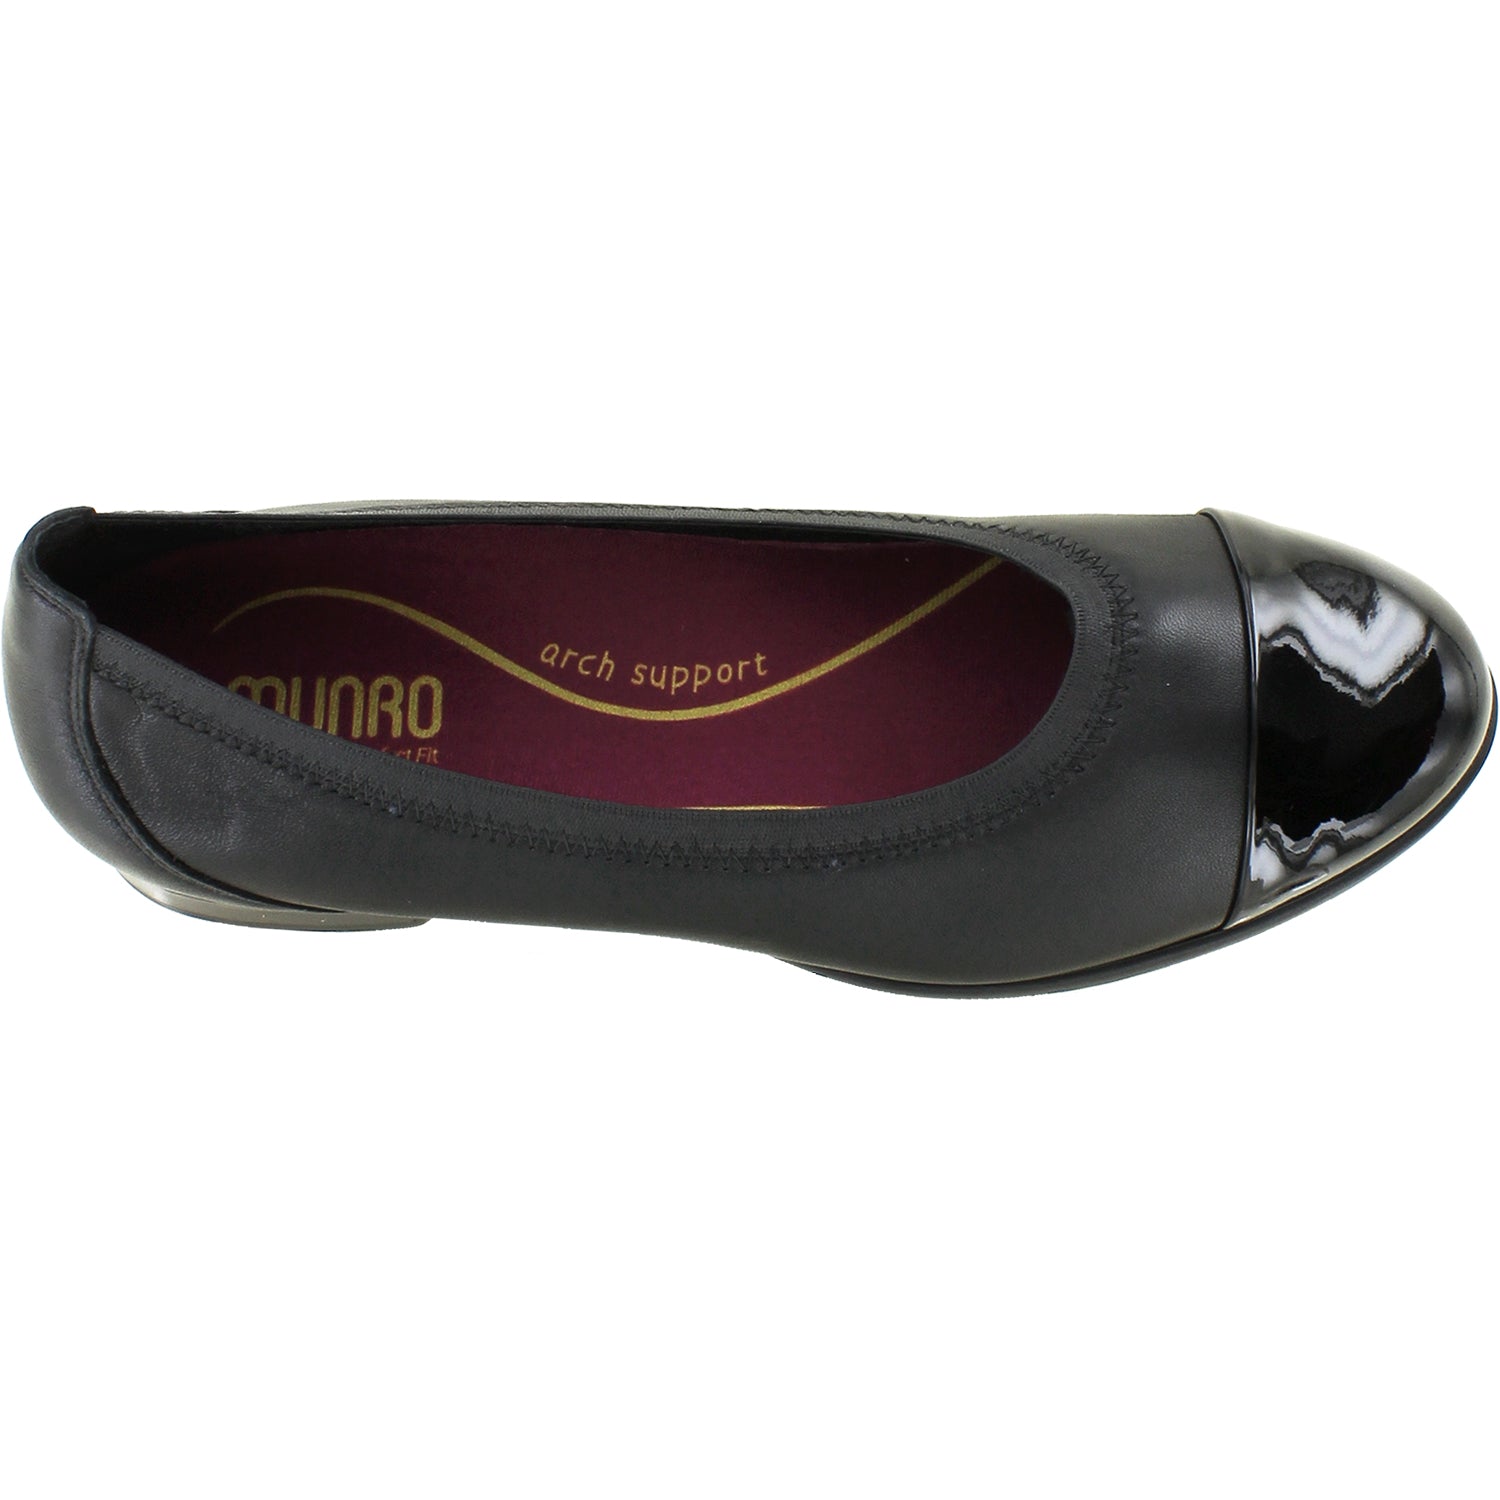 Munro Mila | Women's Slip-On Shoes | Footwear etc.